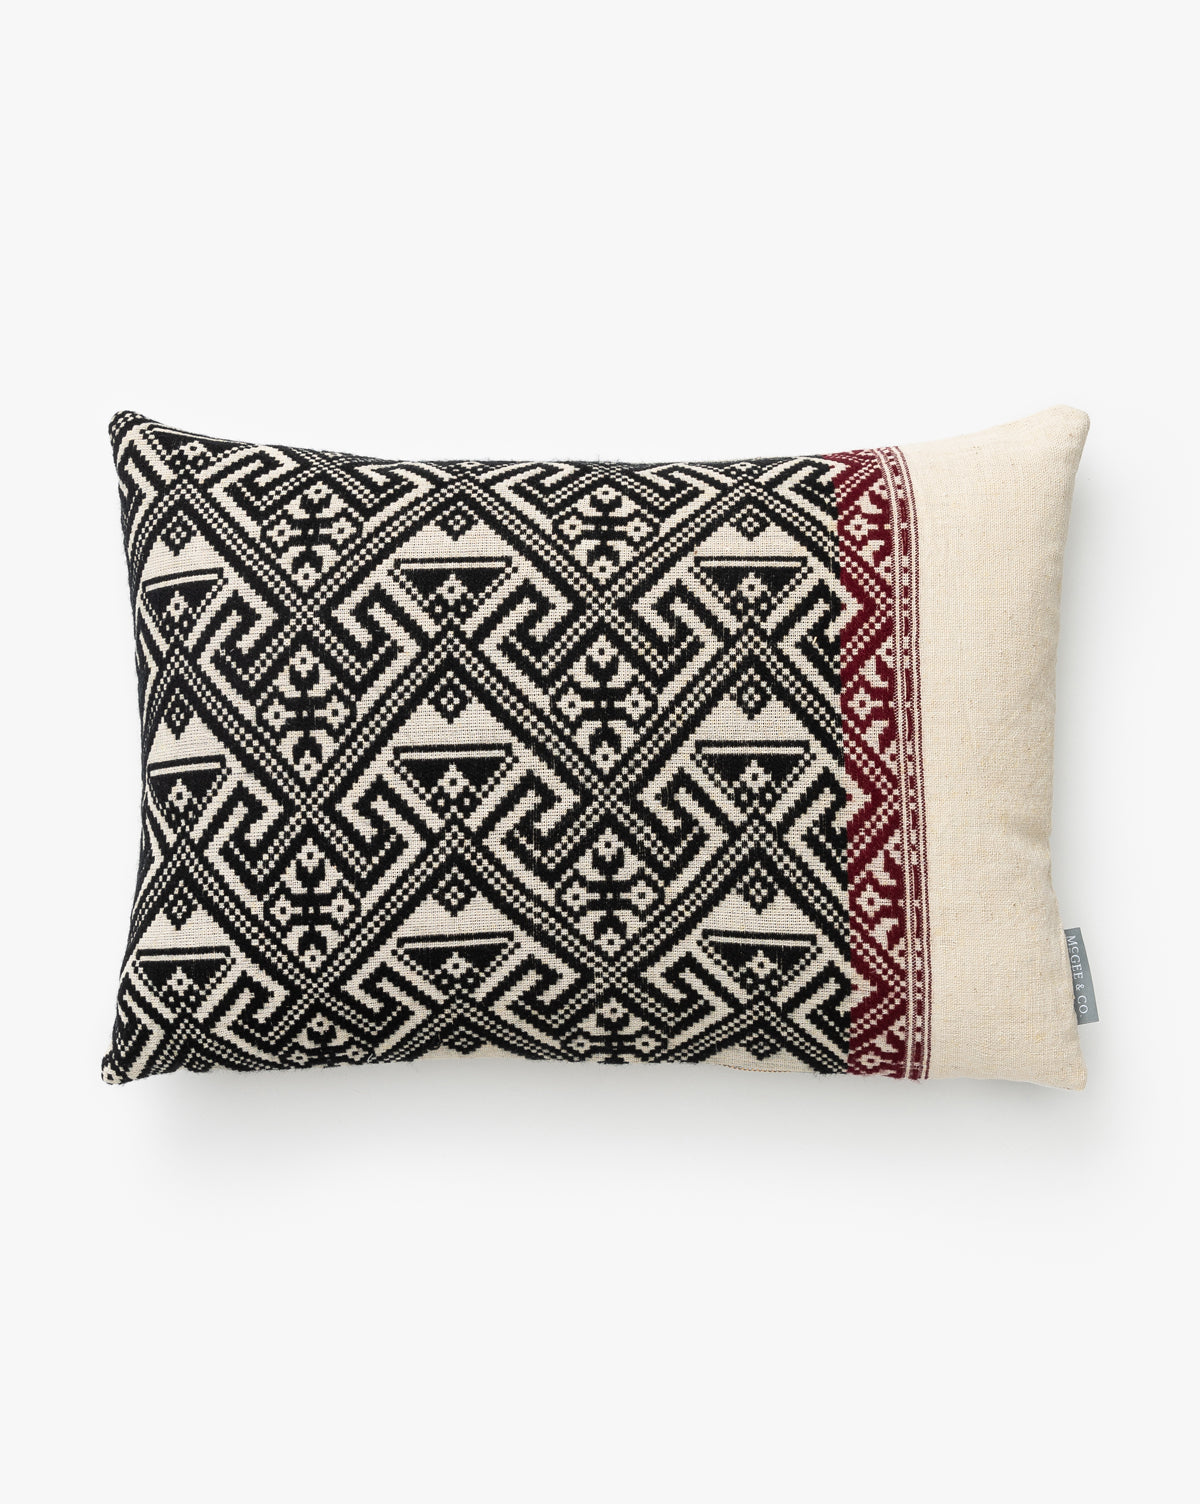 Tangren, Vintage Black Tribal Print Pillow Cover No. 4